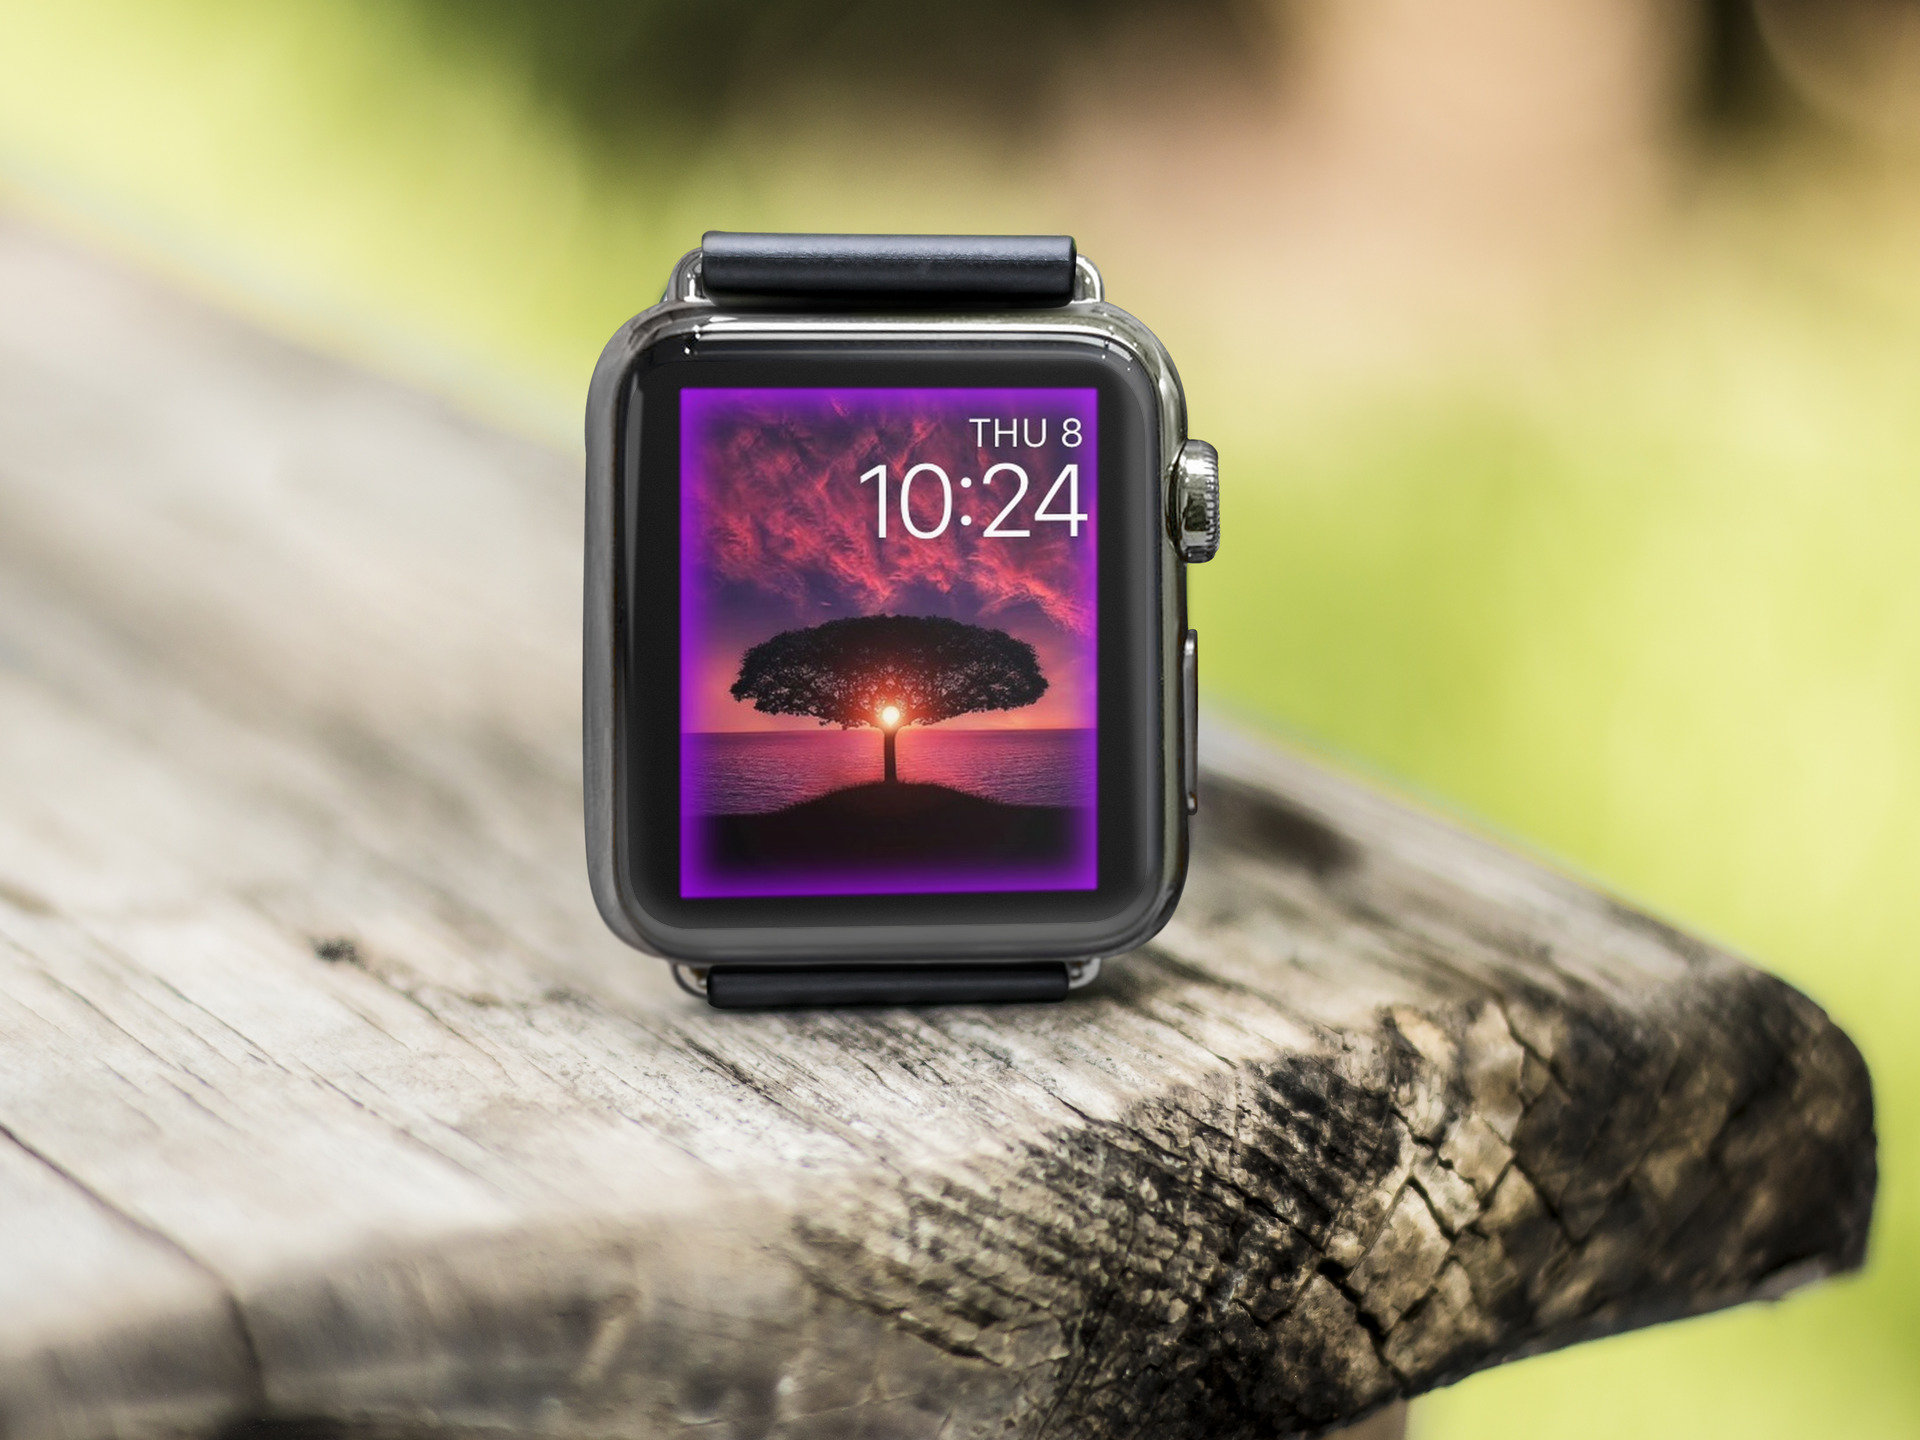 watch wallpaper,watch,gadget,purple,mobile phone,portable communications device